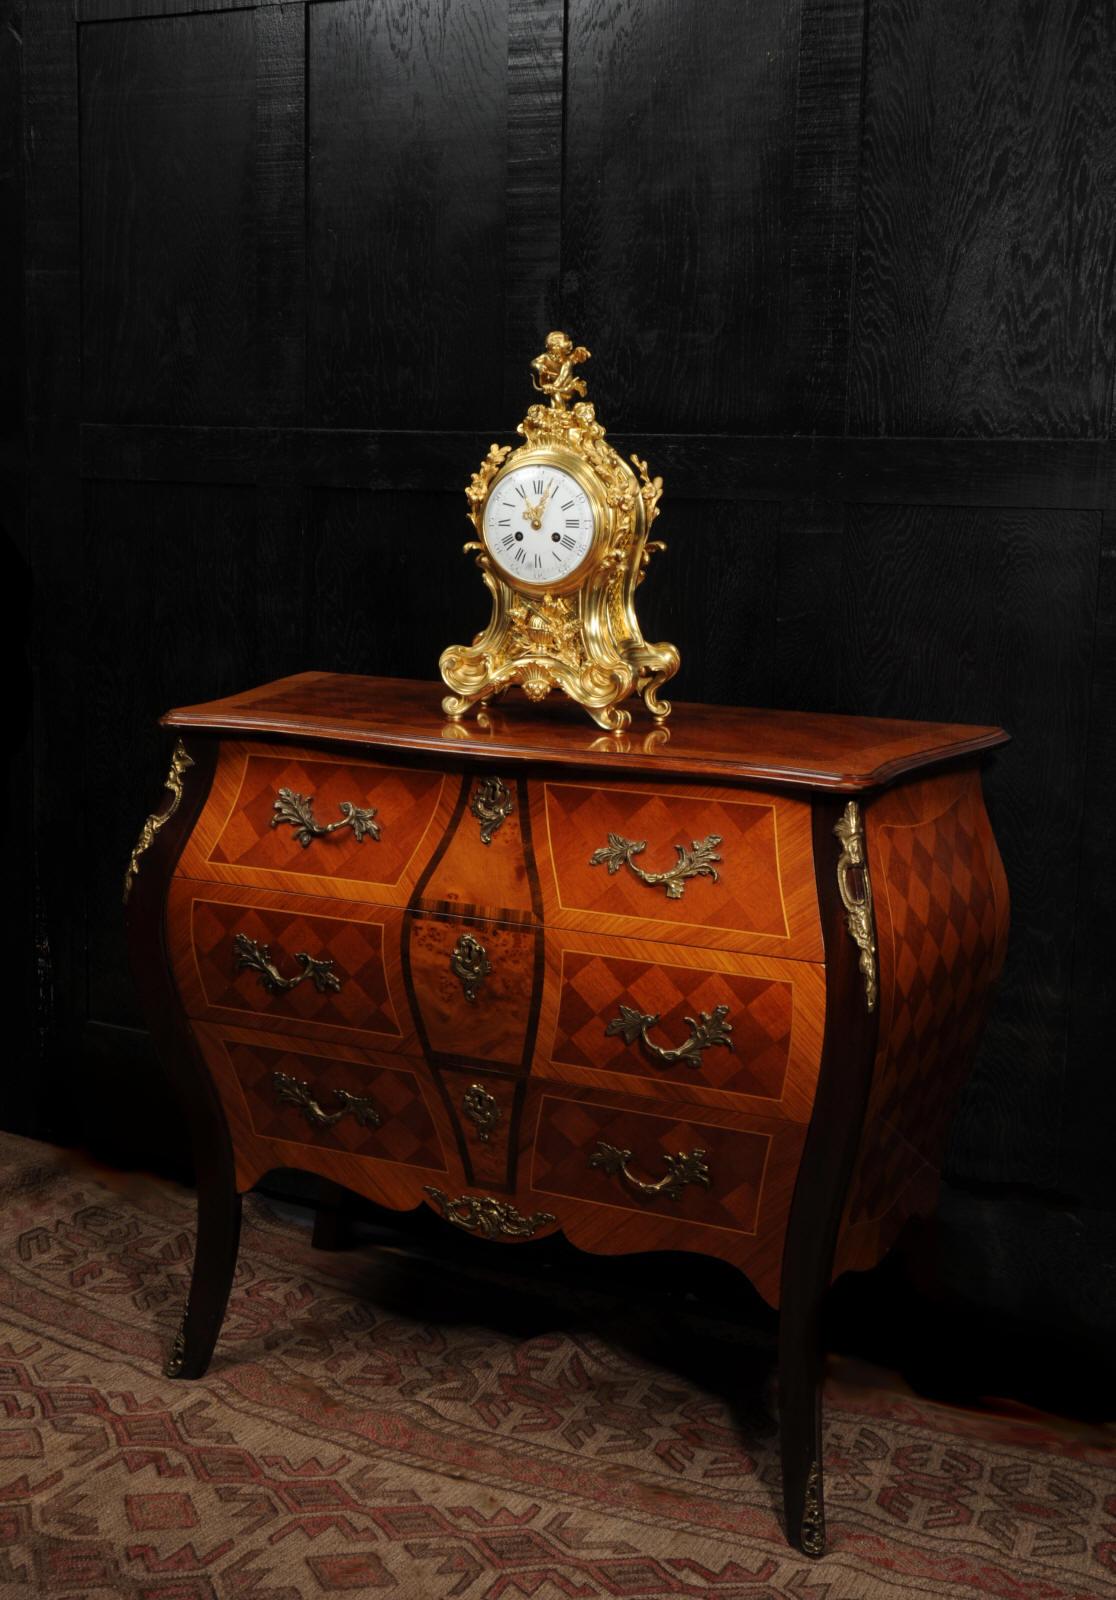 Belle horloge rococo française ancienne en bronze doré - Cupidon en vente 2